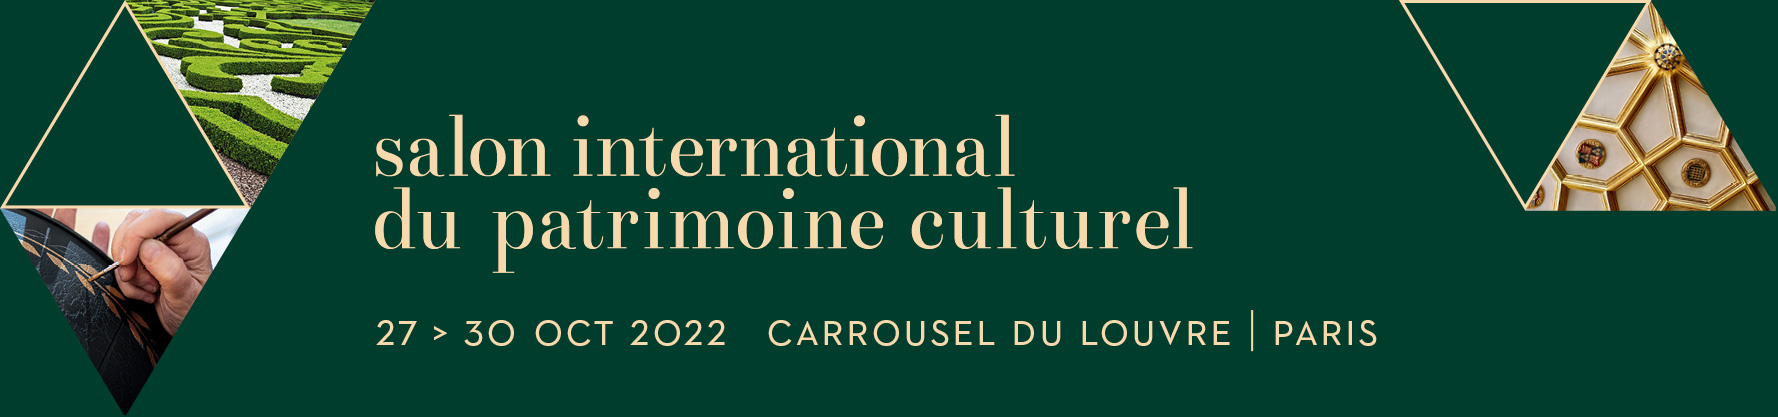 Salon international du Patrimoine culturel 